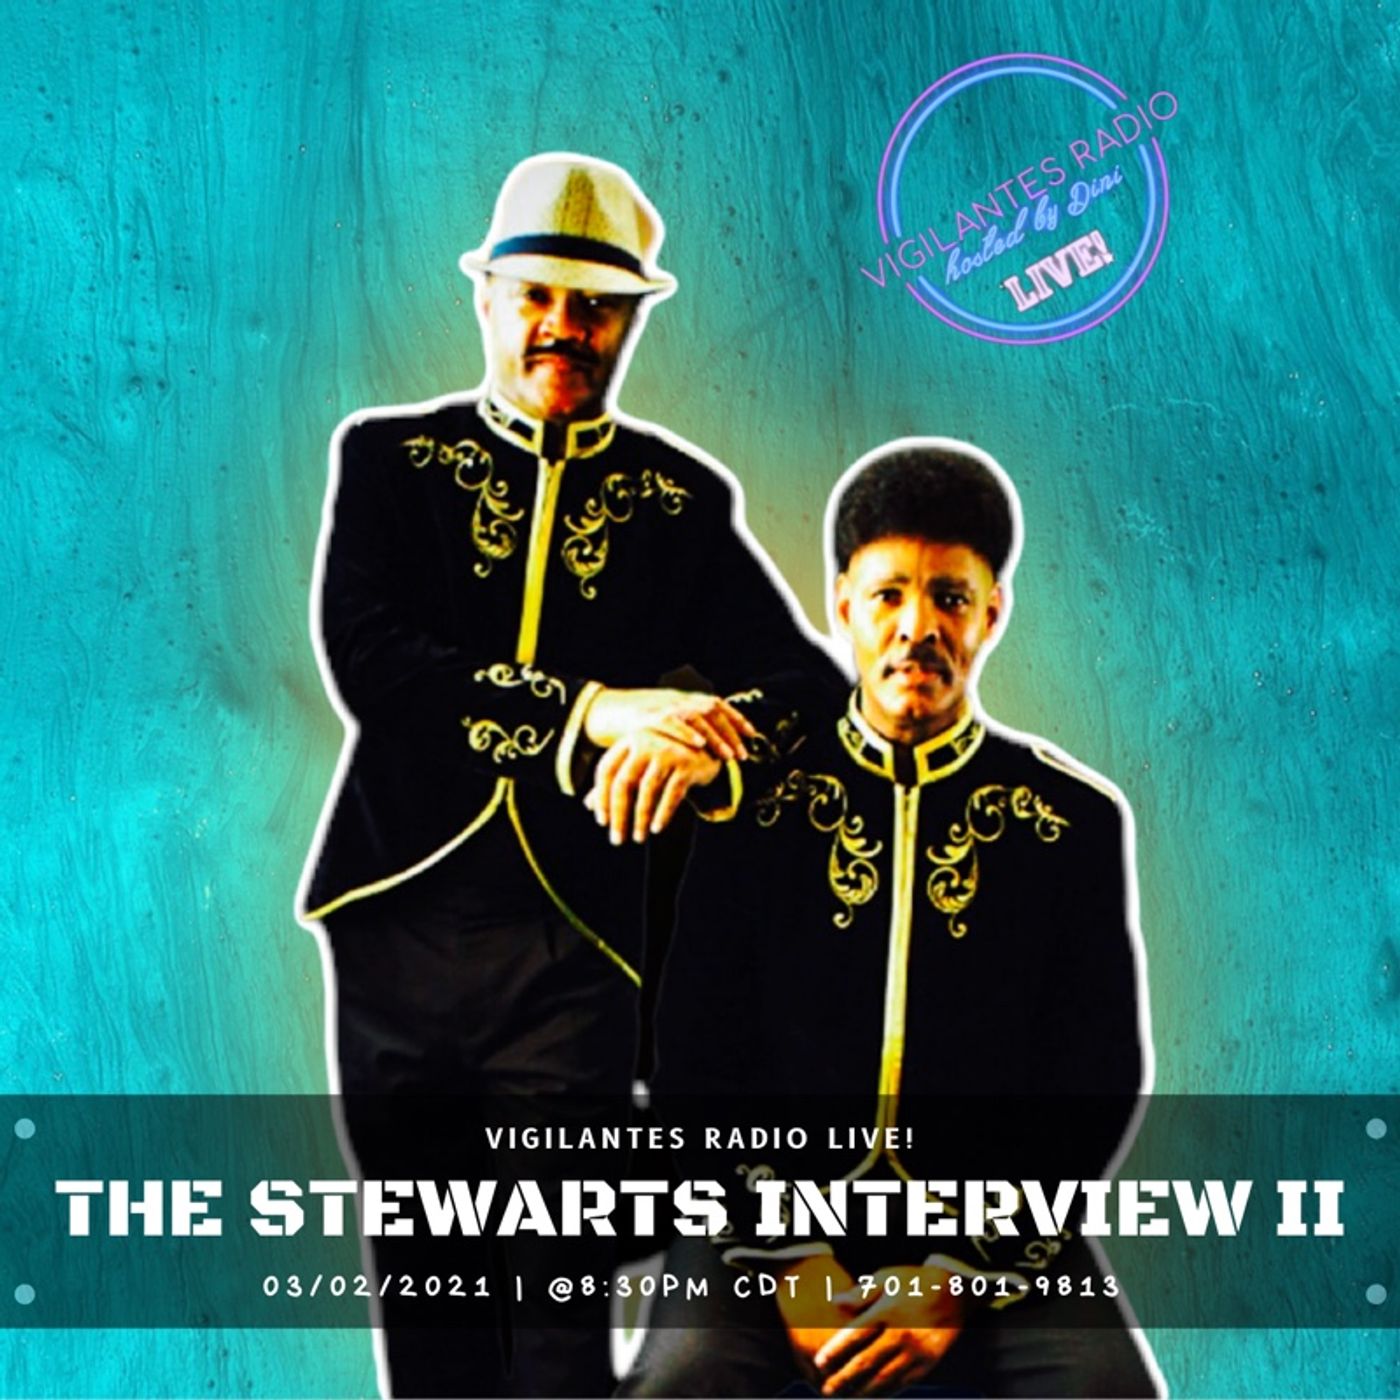 The Stewarts Interview II. Image